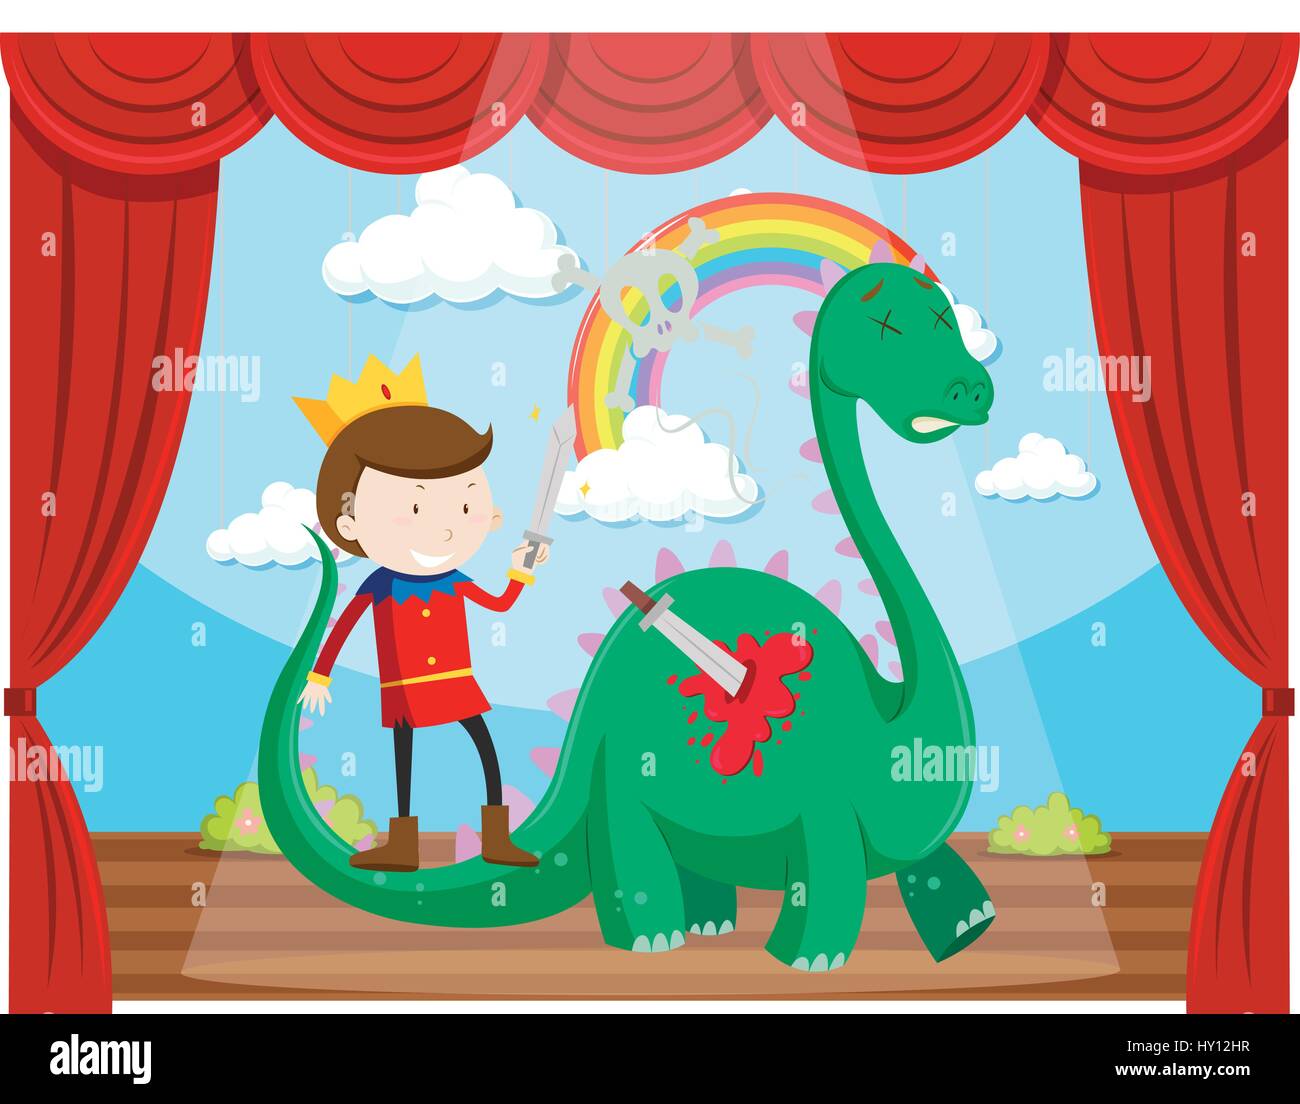 Prince killed dragon on stage illustration Stock Vector